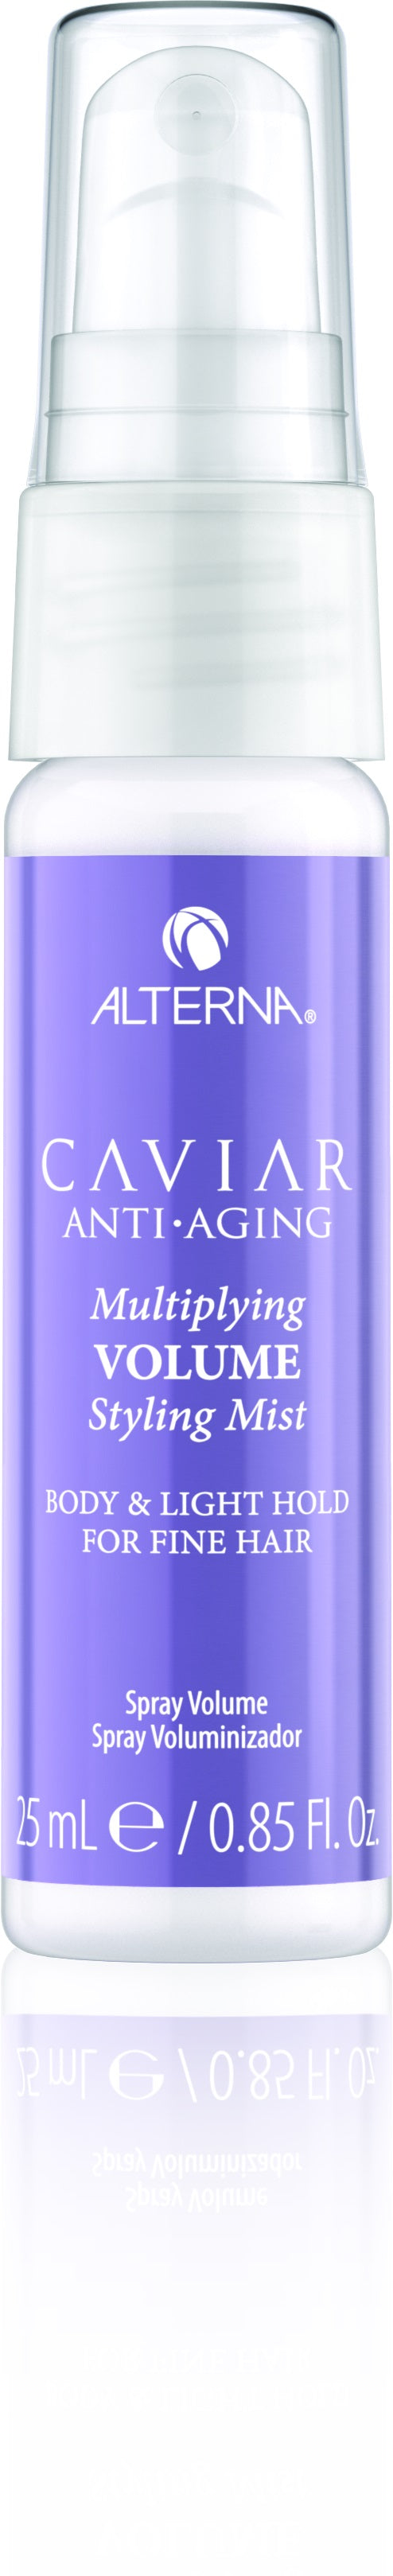 Alterna Caviar Anti-Aging Multiplying Volume Styling Mist 25 ml